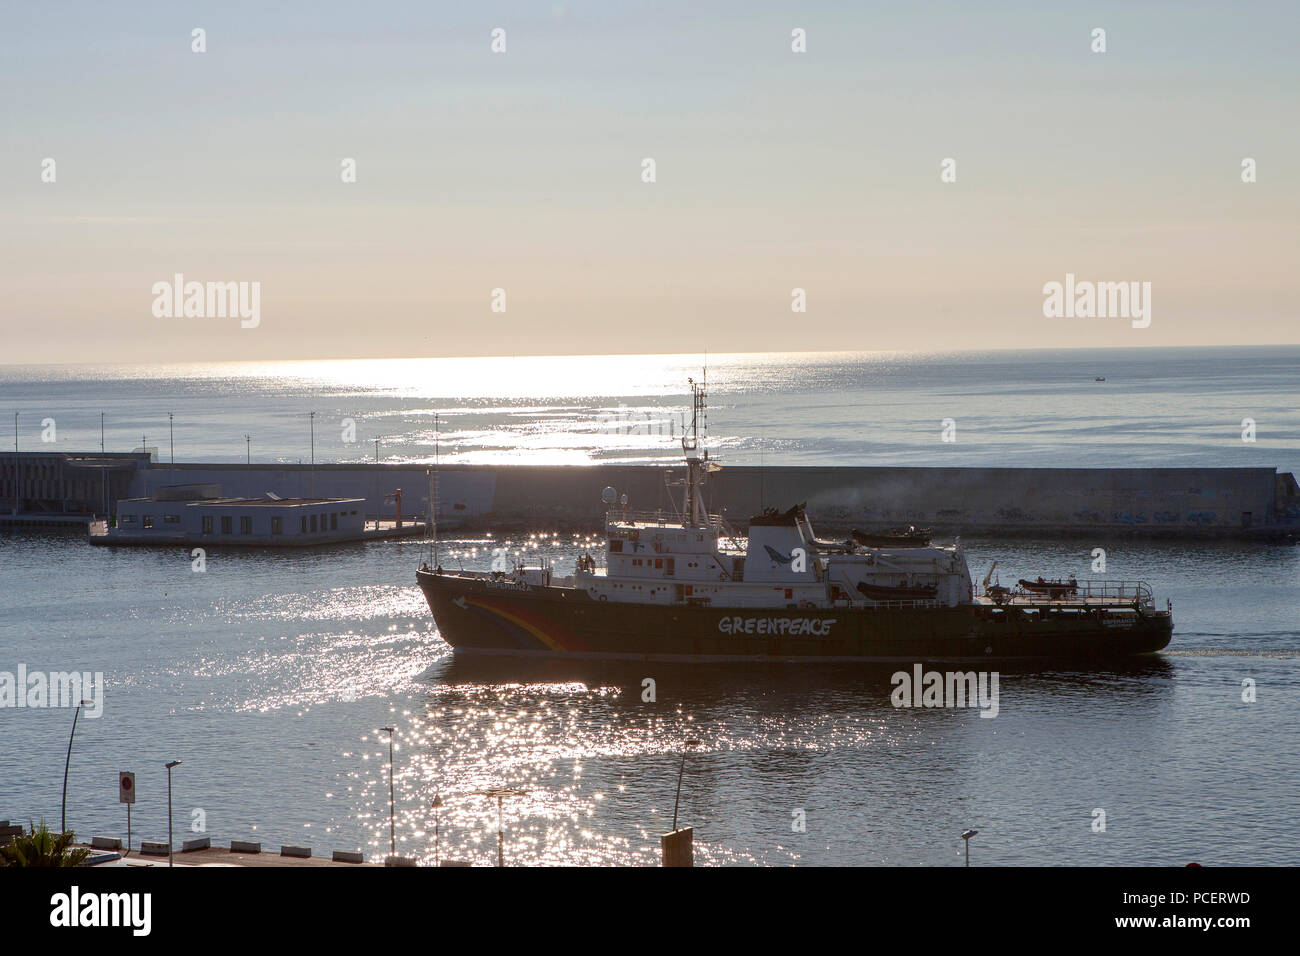 Greenpeace Esperanza ship entering Barcelona port during sunset Stock Photo